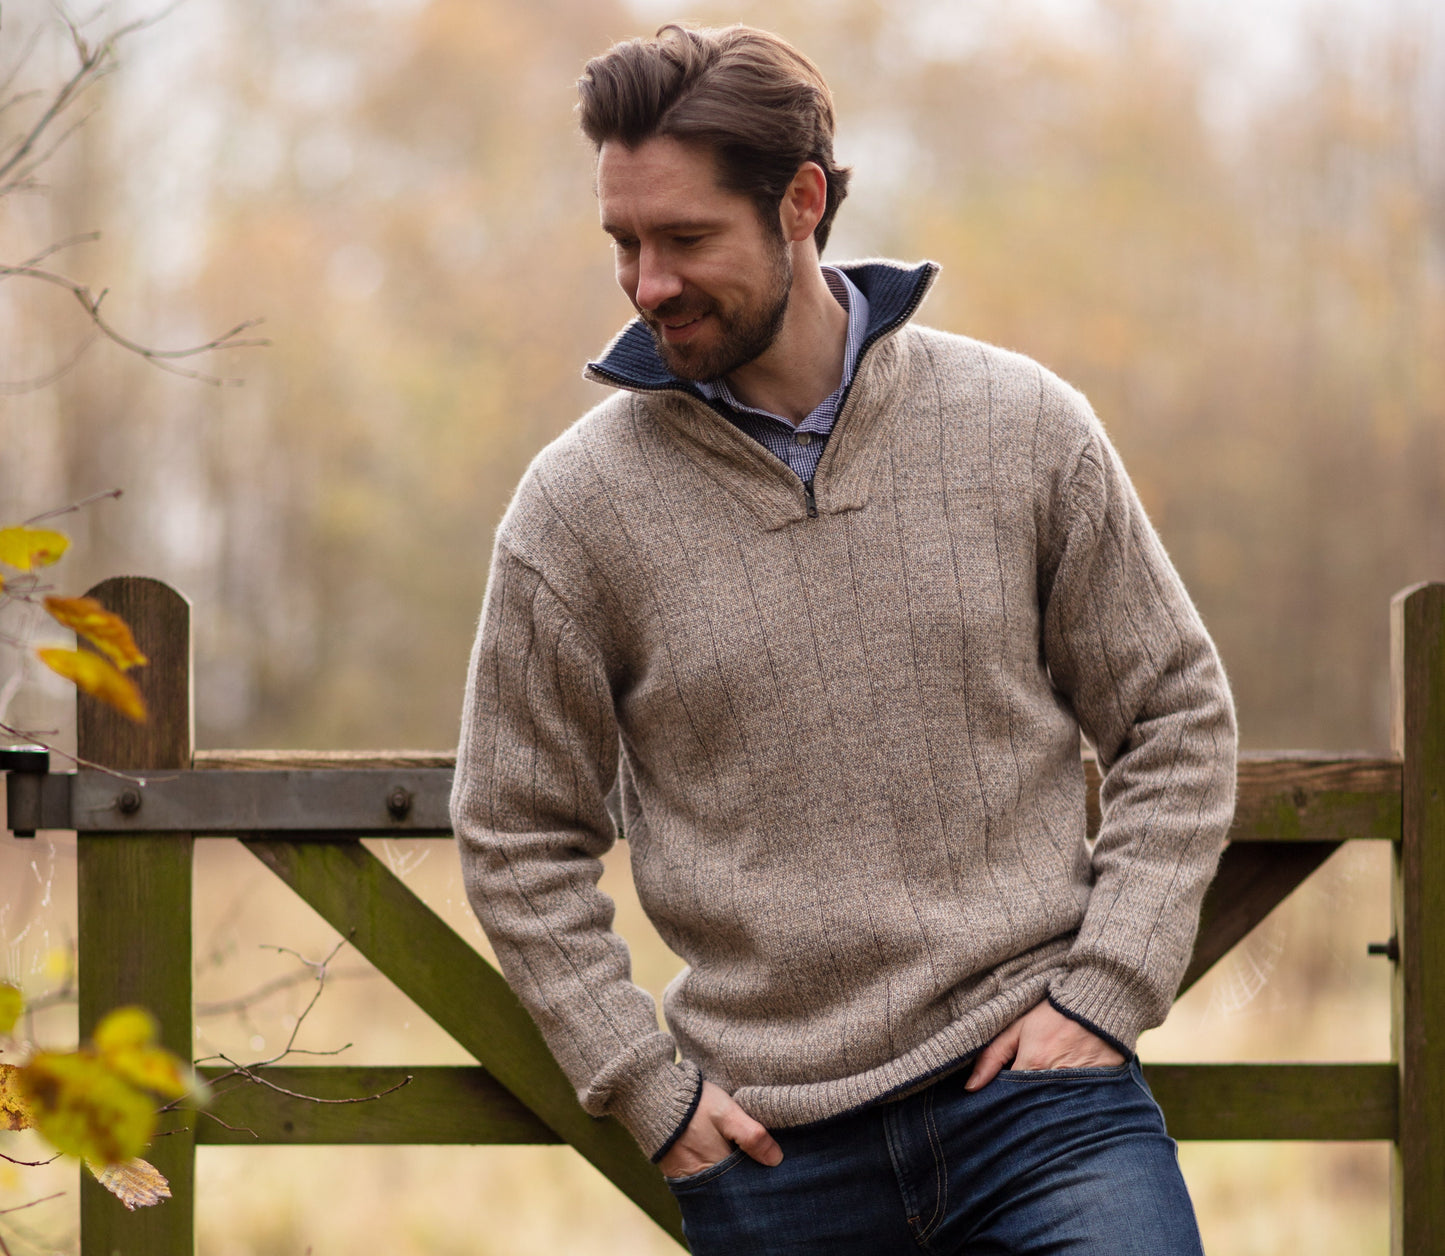 Alpaca wool zip neck jumper, knit sweater for men, Small to XXL sizes